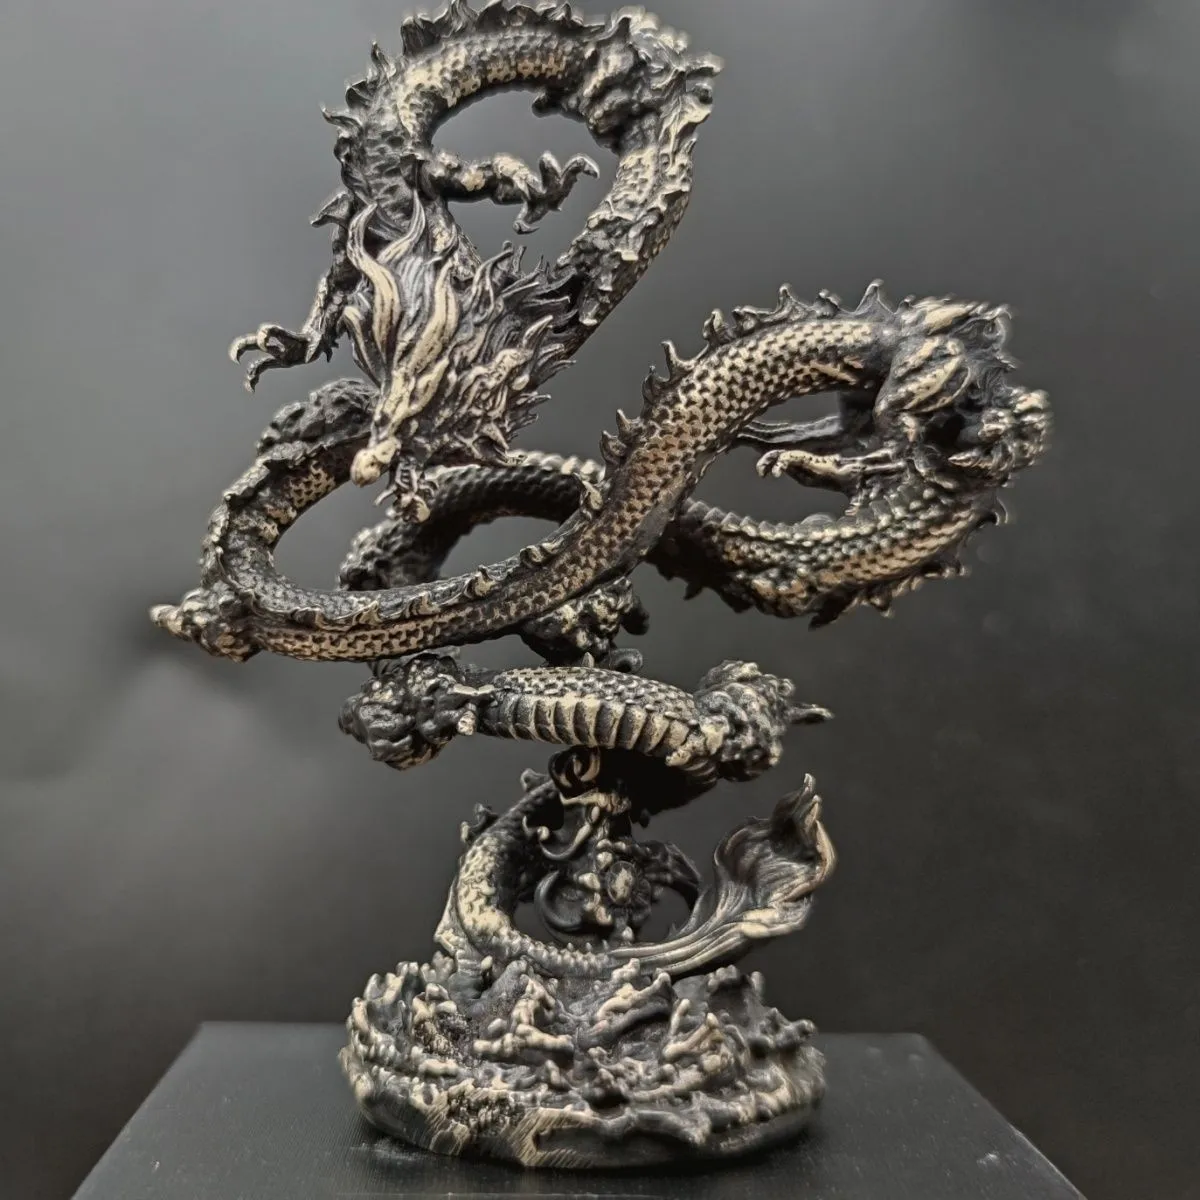 

Brass Dragon Casting Statue Animal Metal Figurine Home Decor Desktop Crafts Sculpture Decoration